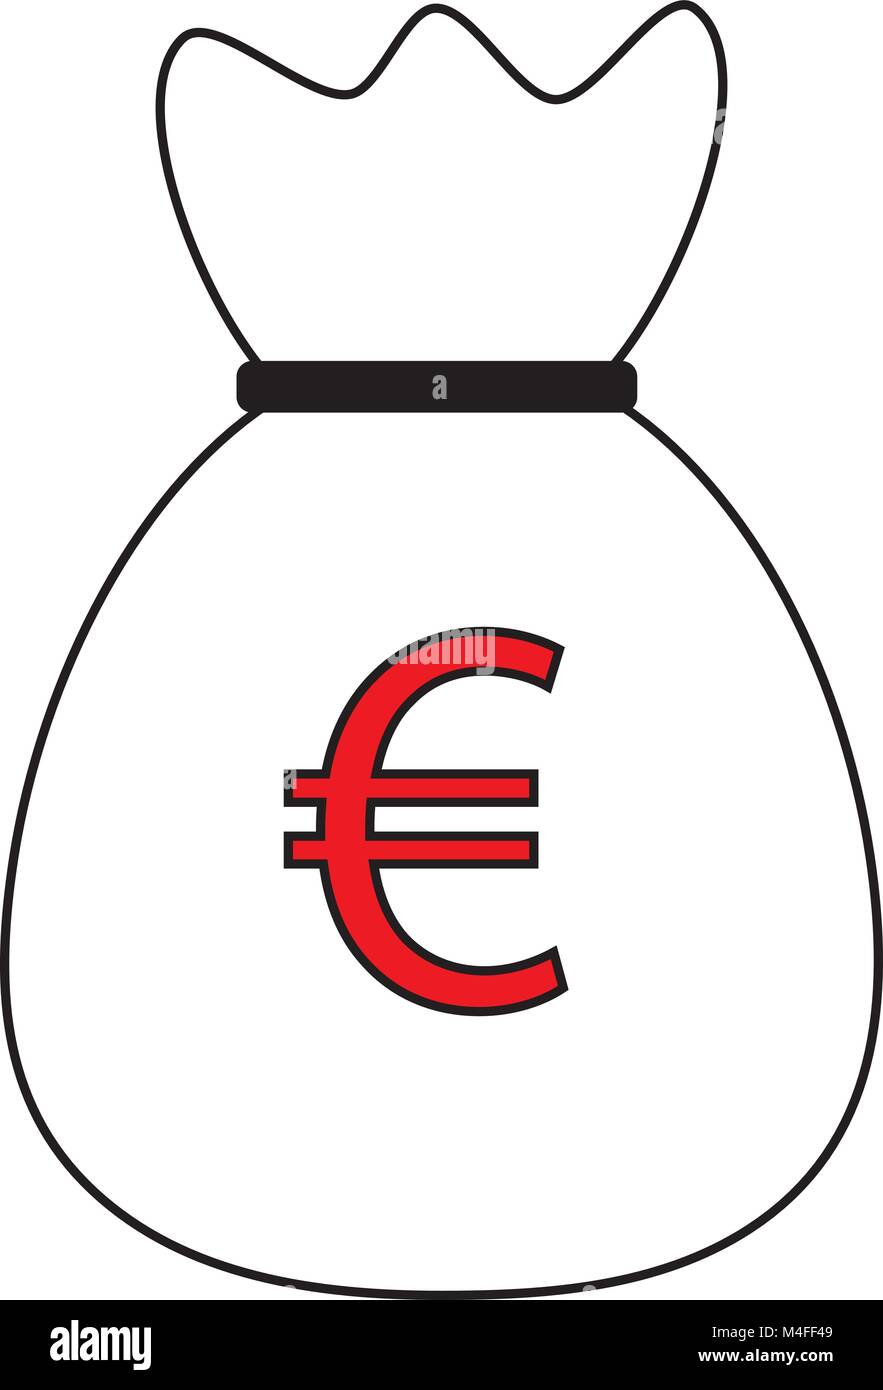 Euro currency icon or logo vector over a money bag. Symbol for European Union bank, banking or Europe Eurozone finances. Stock Vector